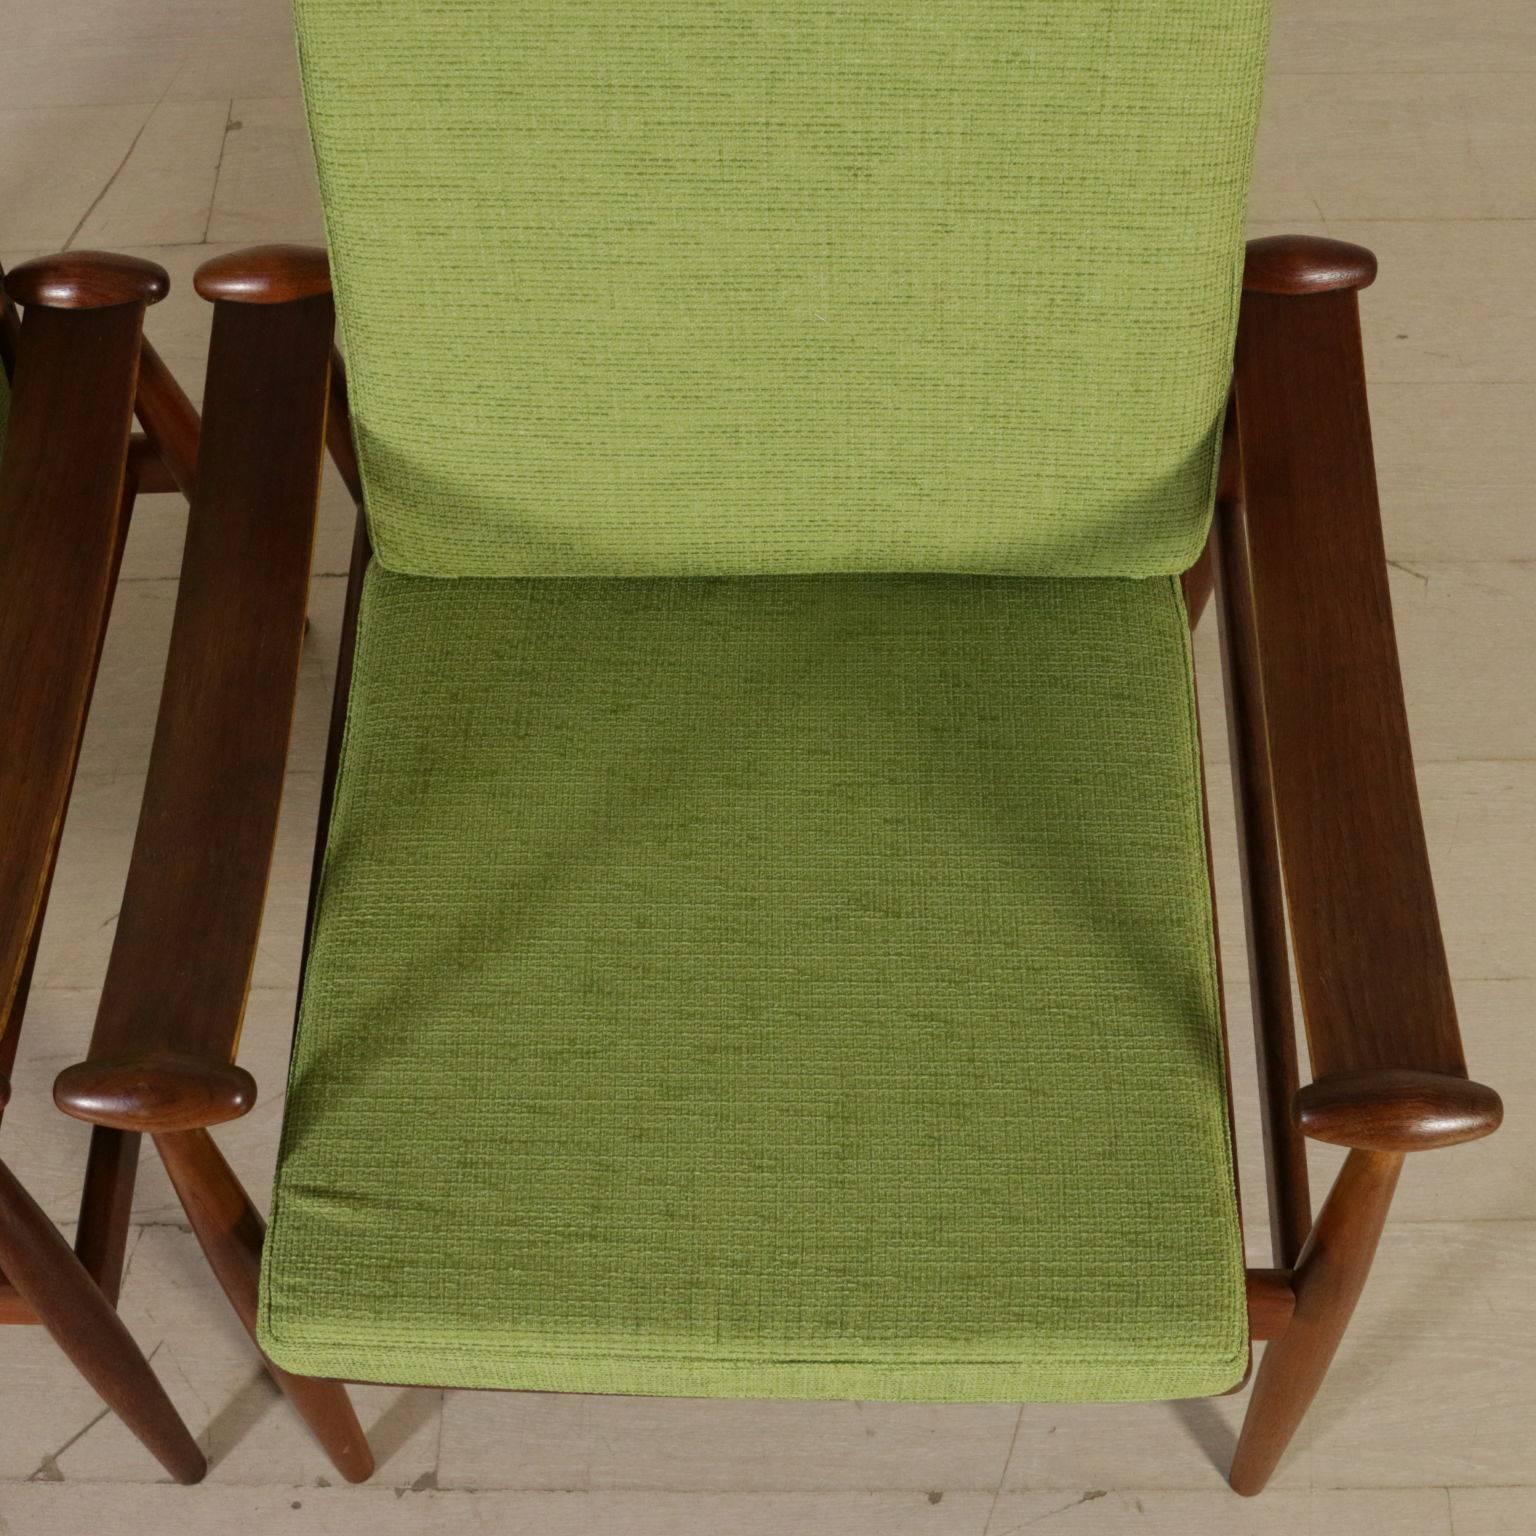 Upholstery Pair of Armchairs Designed by Finn Juhl Teak Vintage, Italy, 1950s-1960s